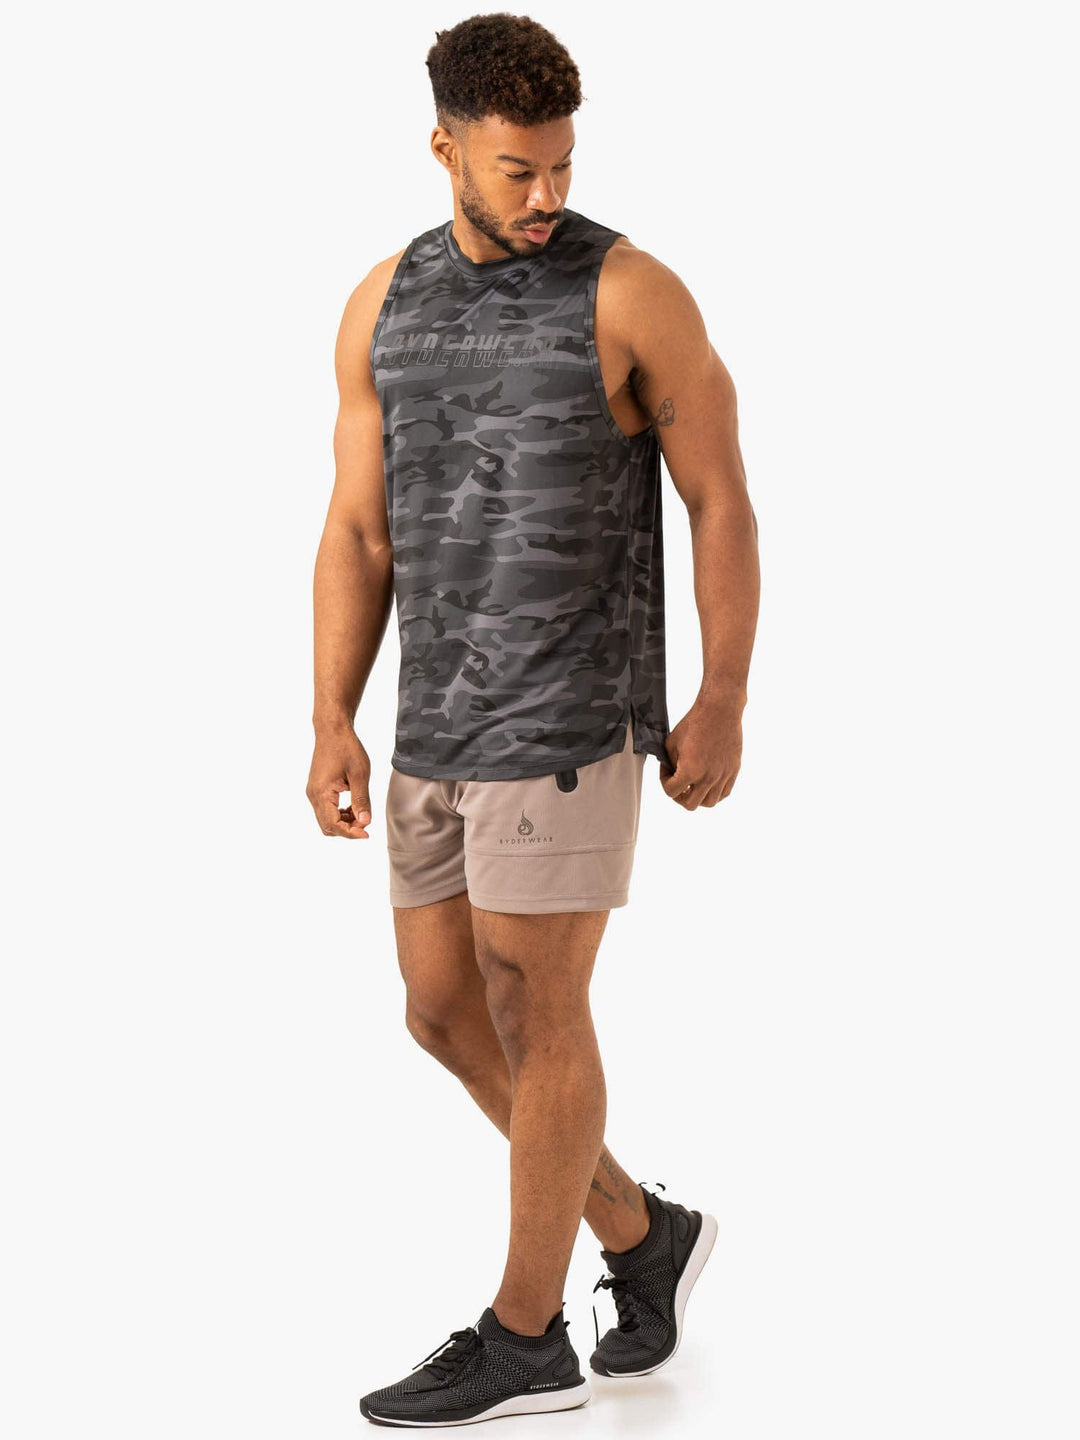 Overdrive Tank - Black Camo Clothing Ryderwear 